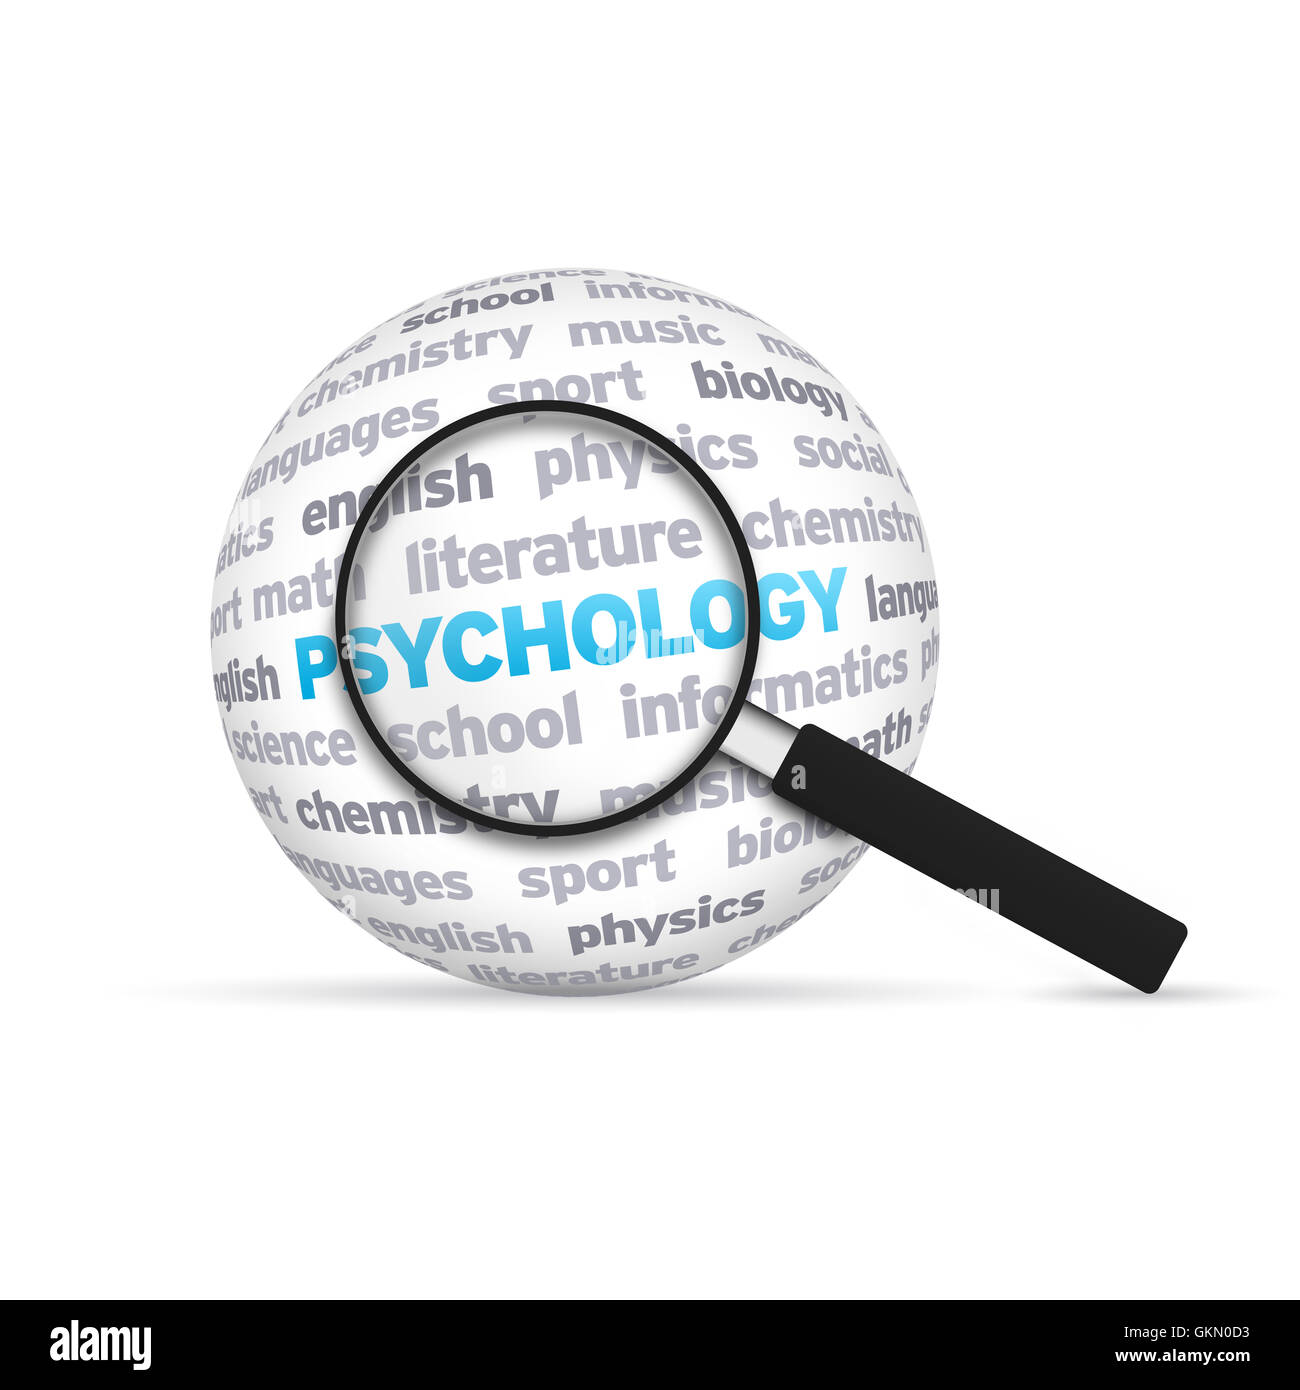 Psychology Stock Photo